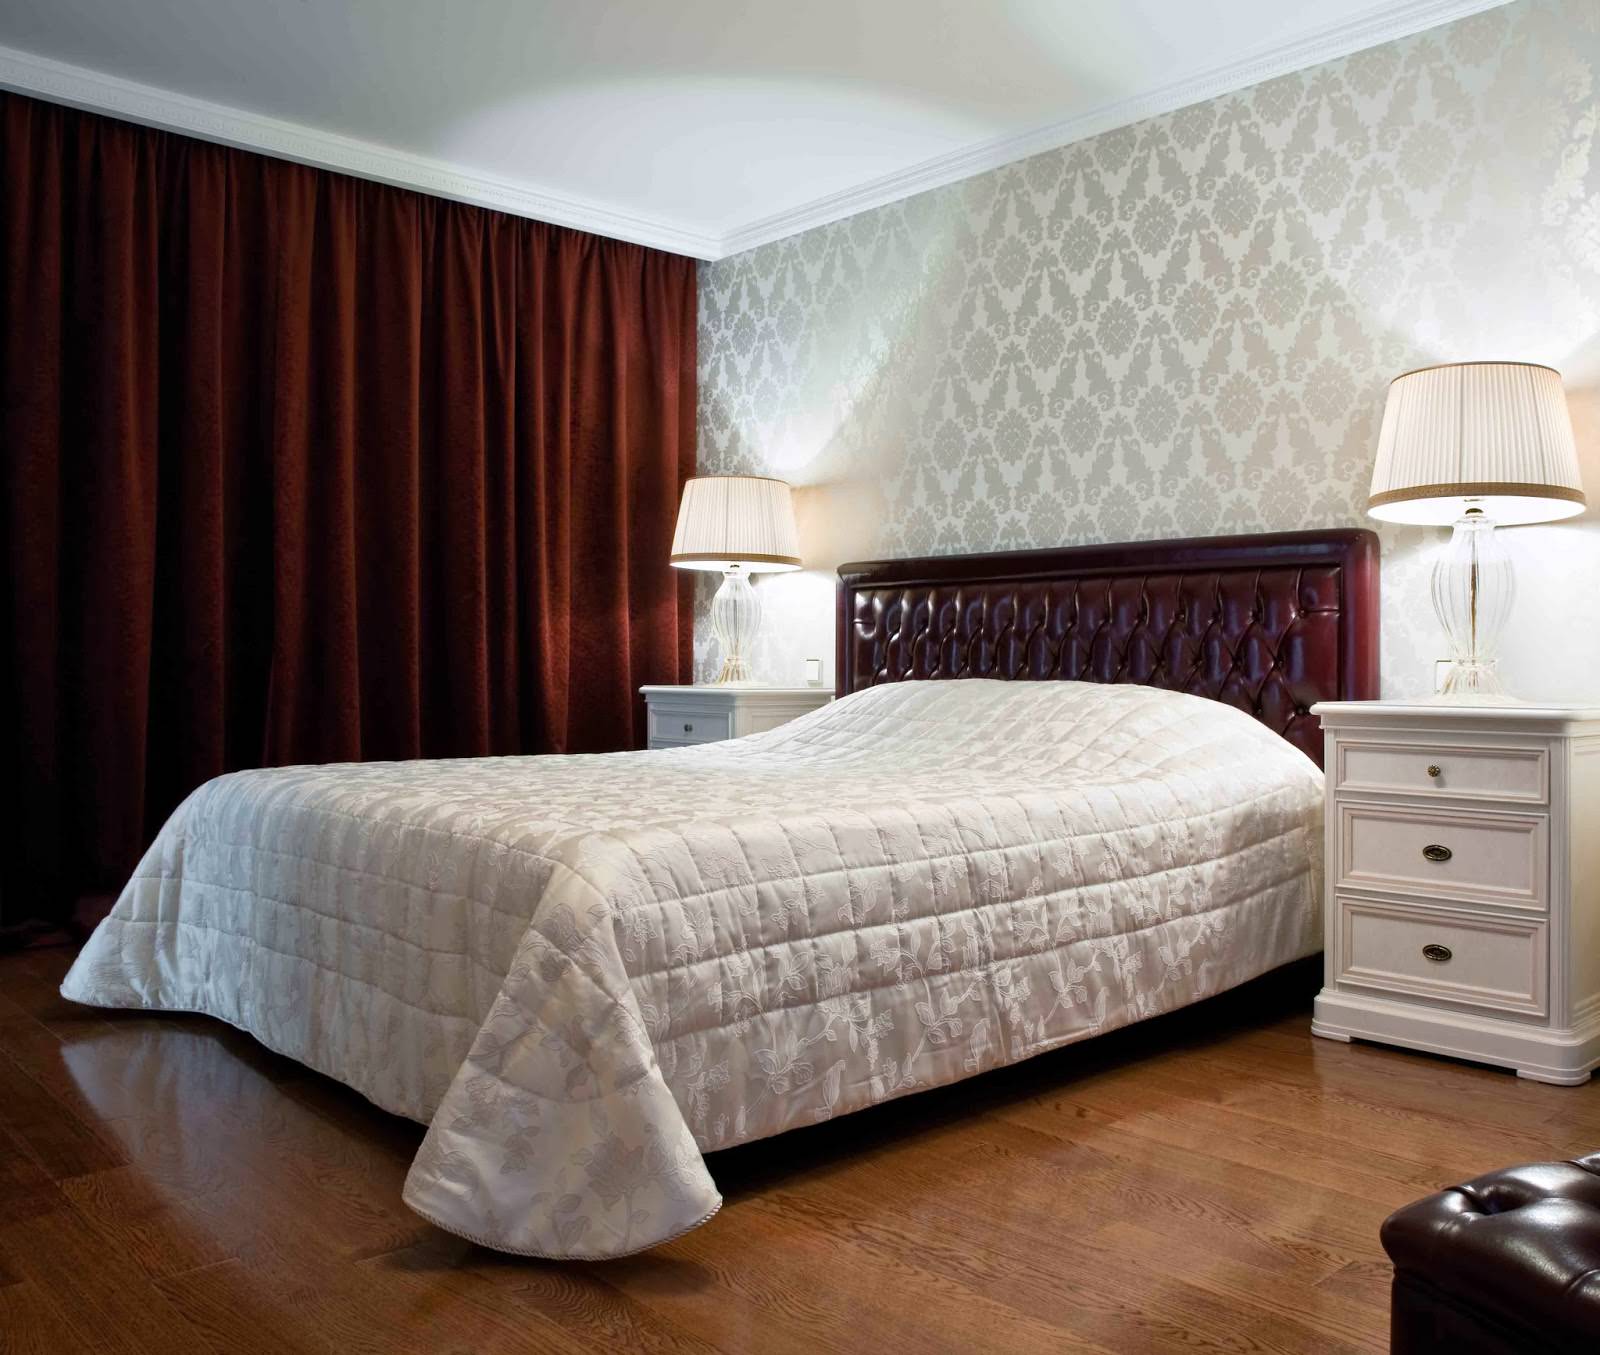 ستائر بورجوندي في تصميم غرفة النوم مع ورق حائط رمادي